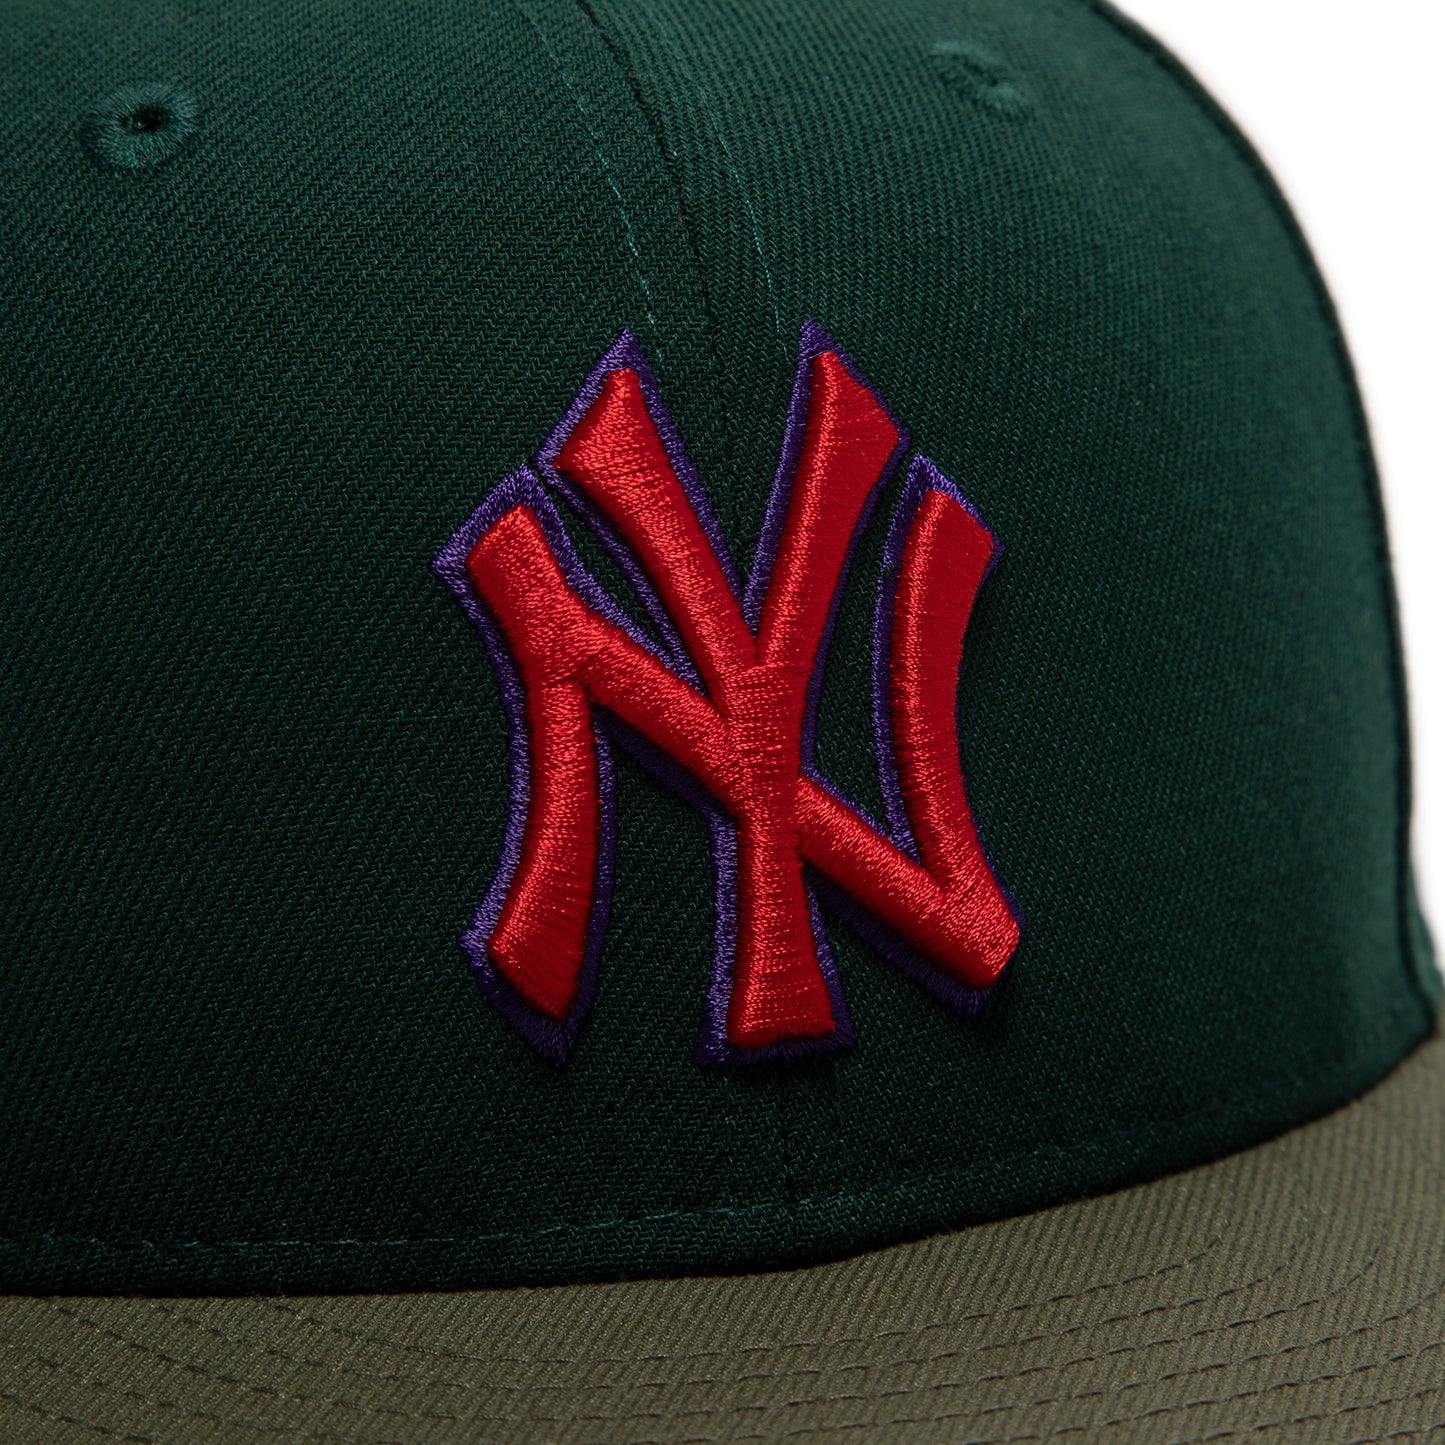 Concepts x New Era 5950 New York Yankees Fitted Hat (Dark Green/Purple)